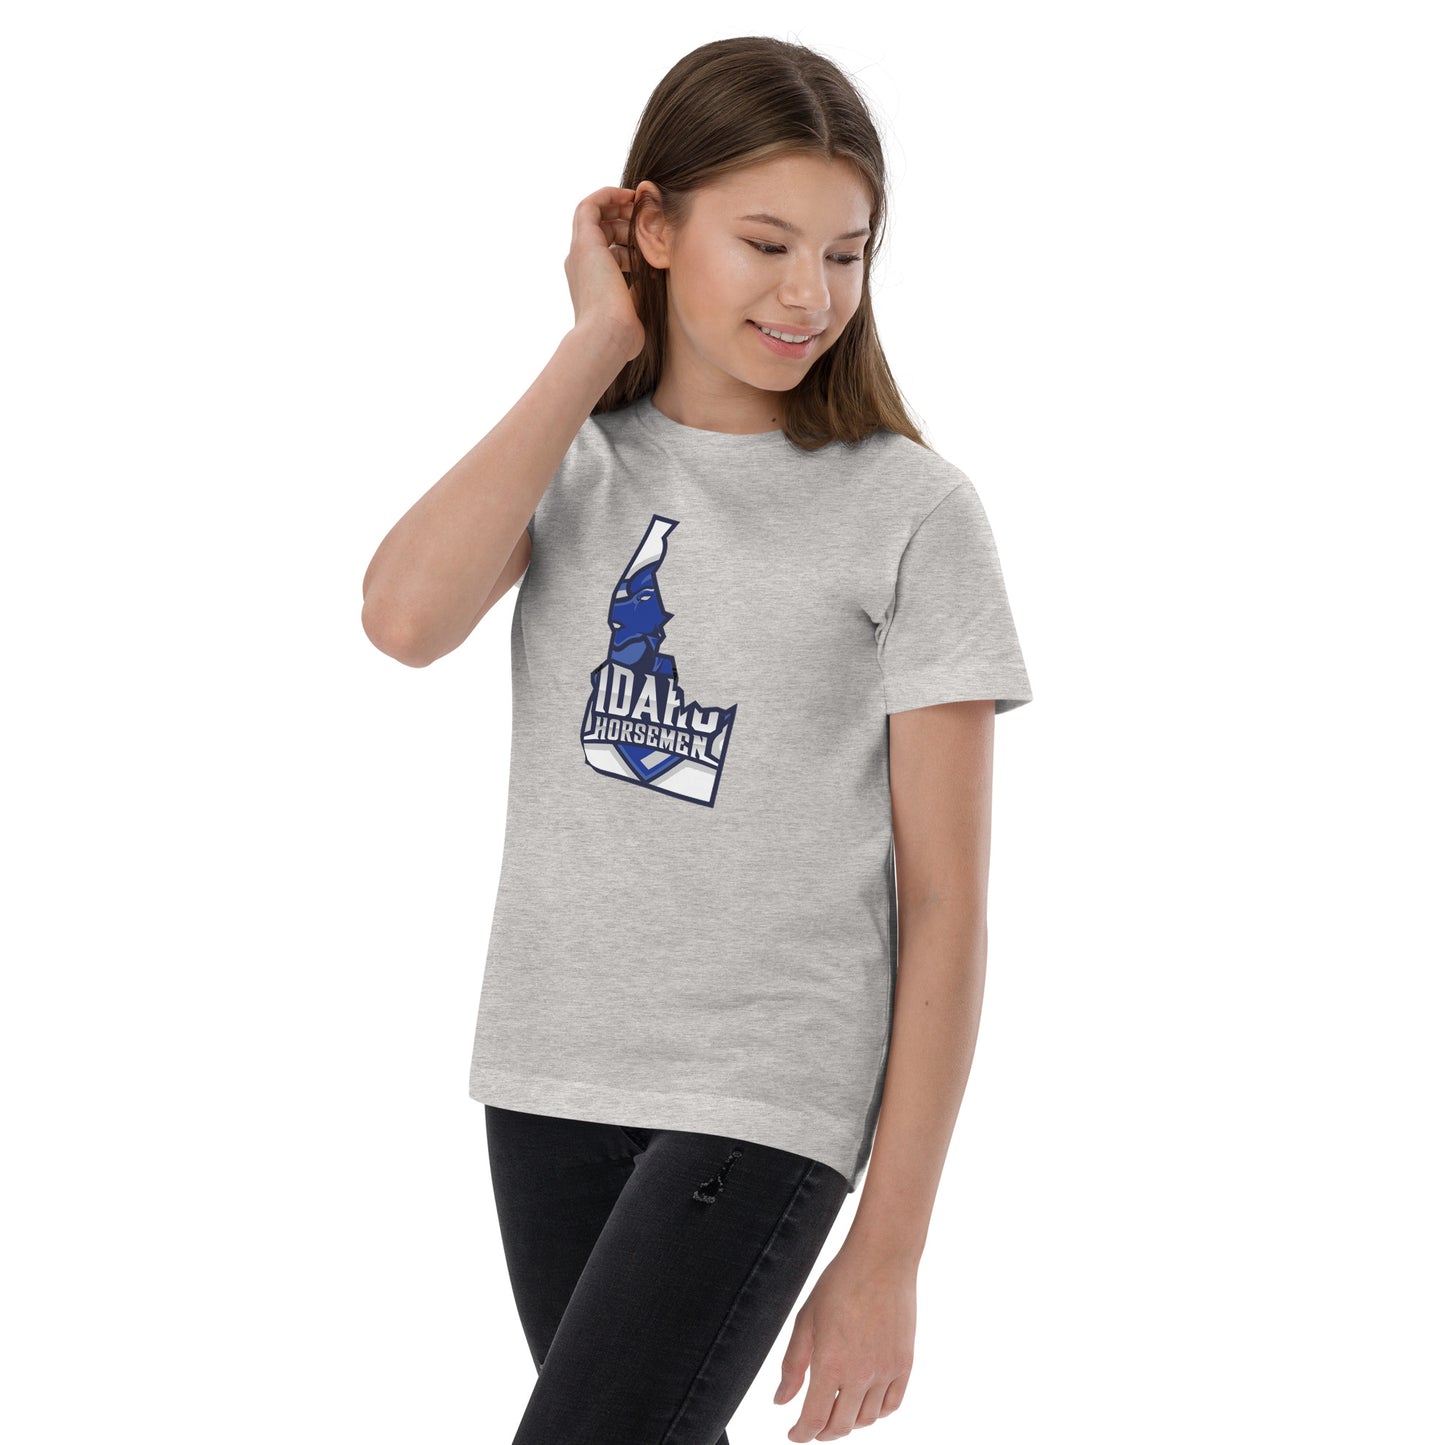 State of Idaho Logo - Youth jersey t-shirt